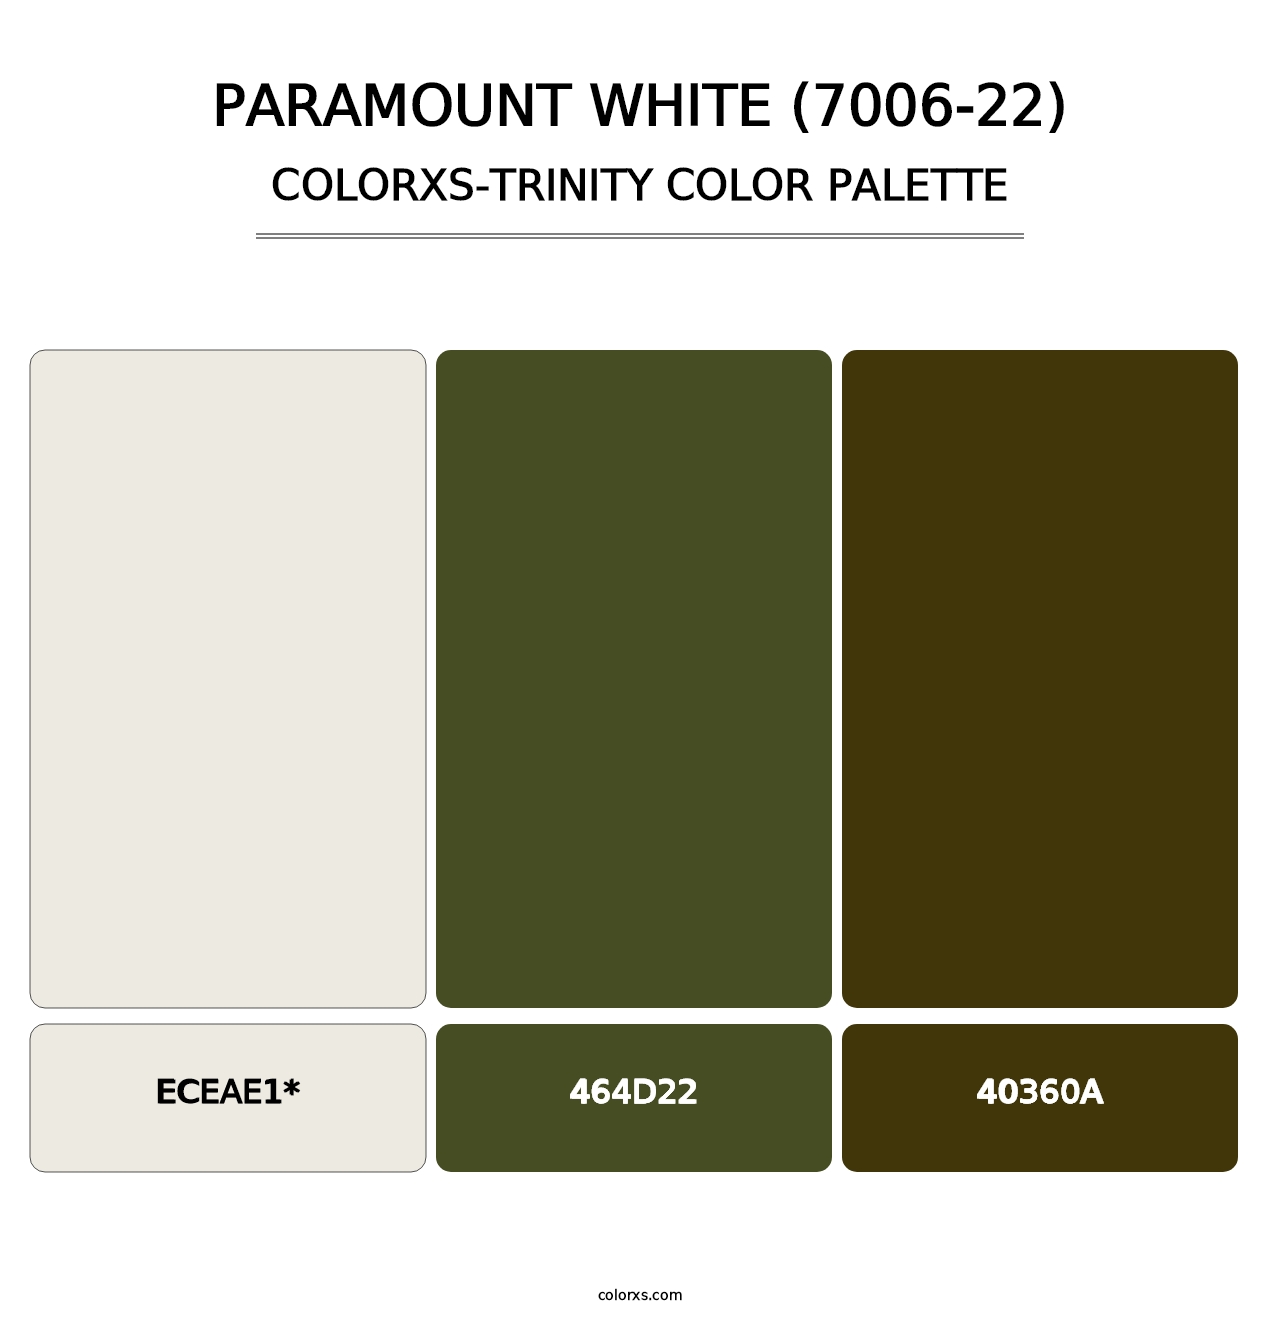 Paramount White (7006-22) - Colorxs Trinity Palette